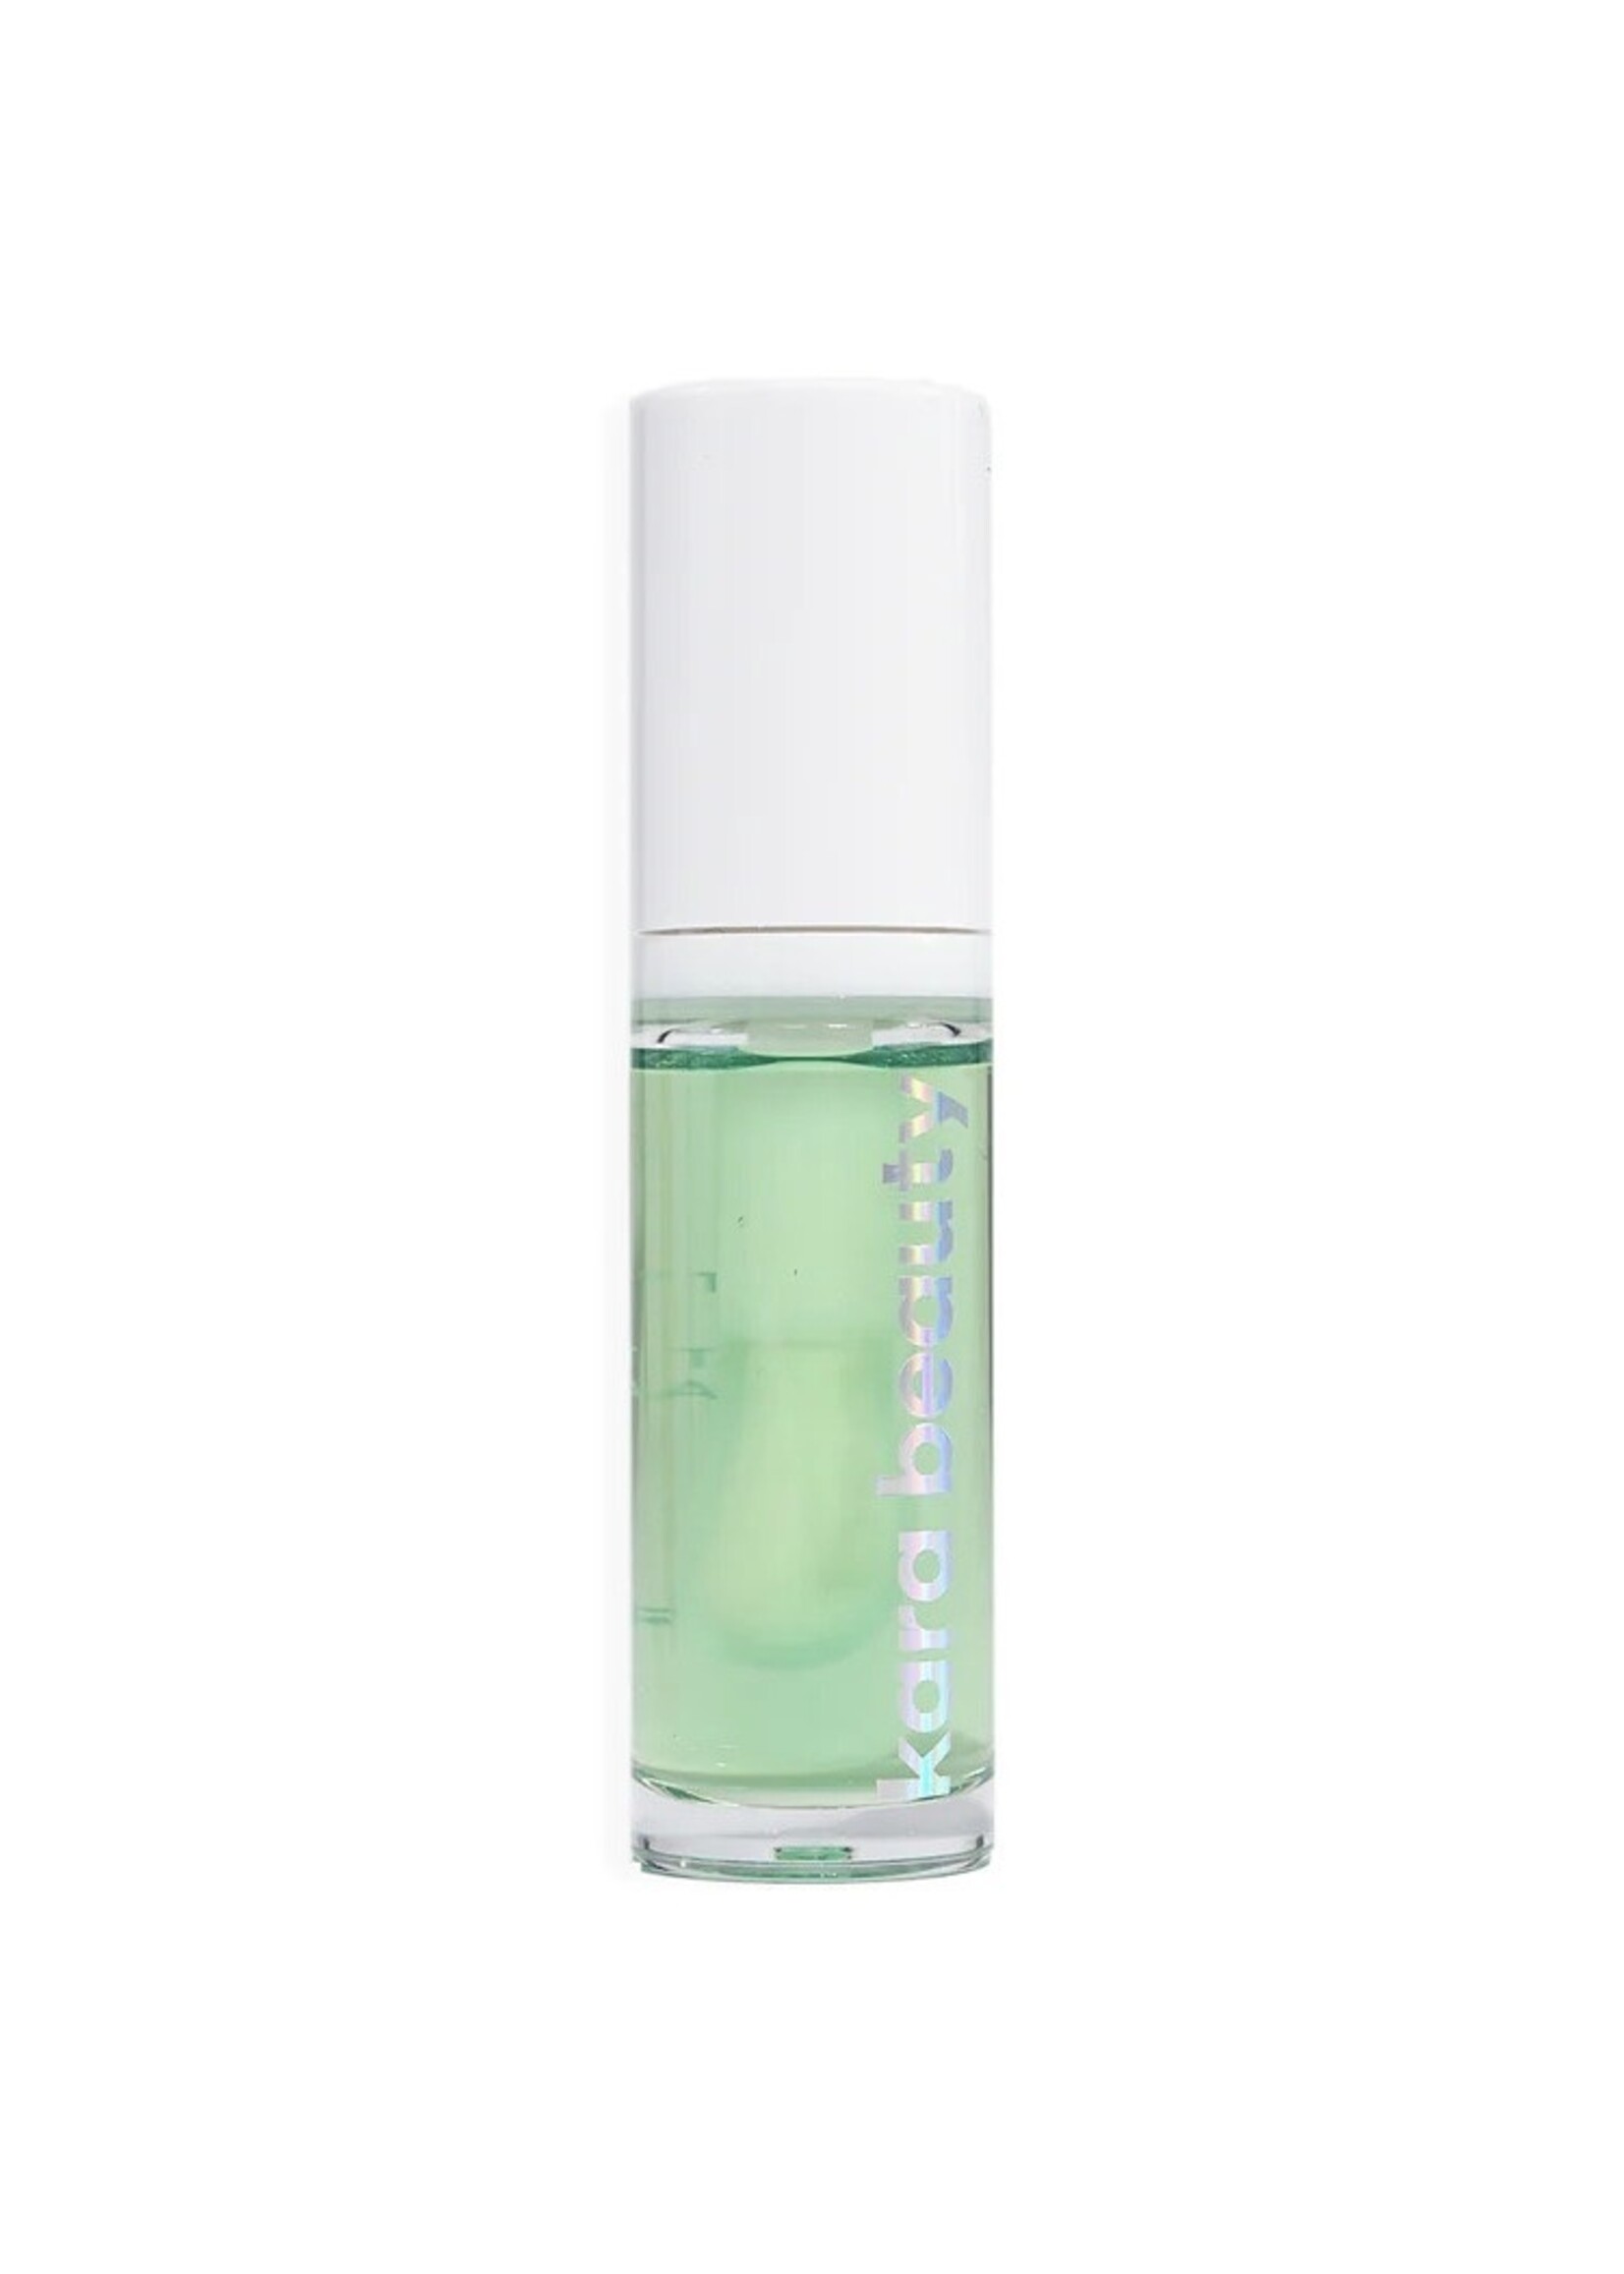 Kara Beauty Lip oil "Essentials" by Kara Beauty